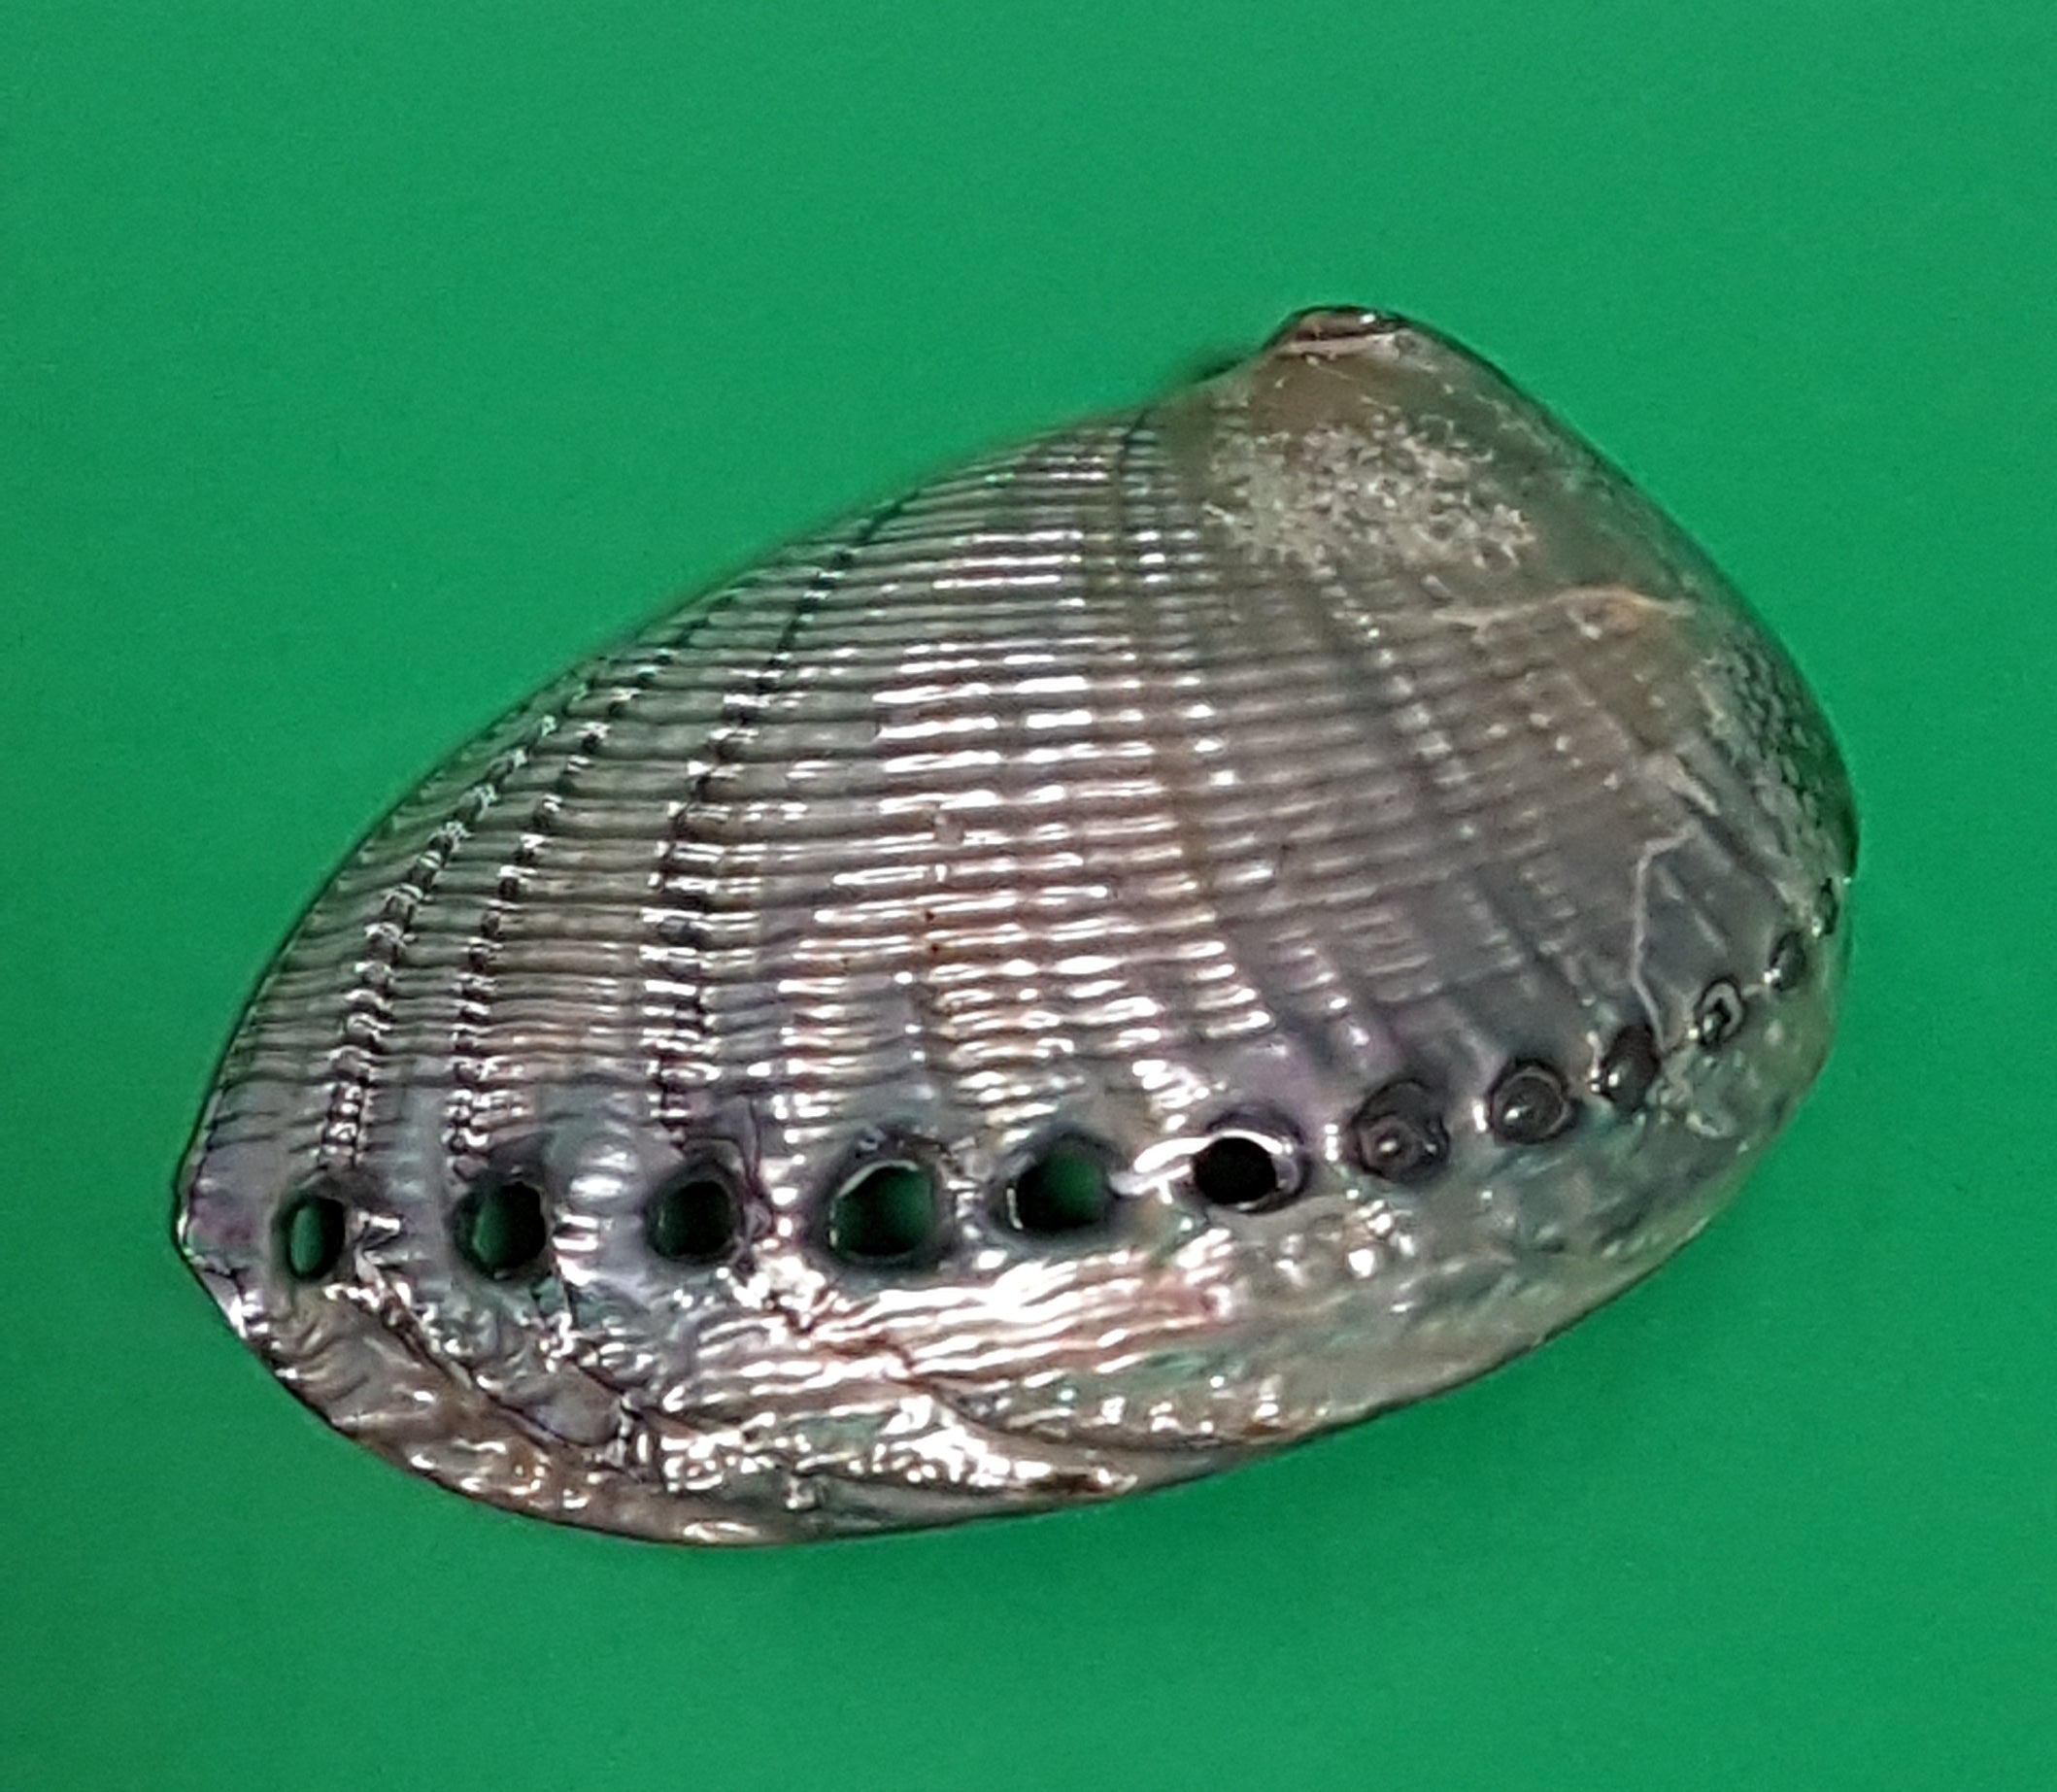 Abalone (Haliotis) 13-14cm